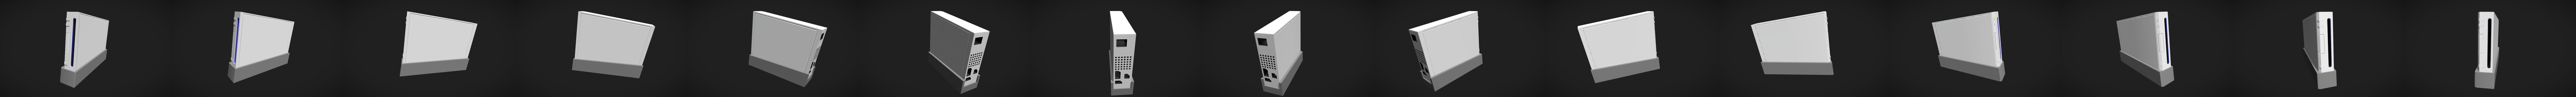 Free Nintendo Wii Console Design Mockup in PSD - DesignHooks